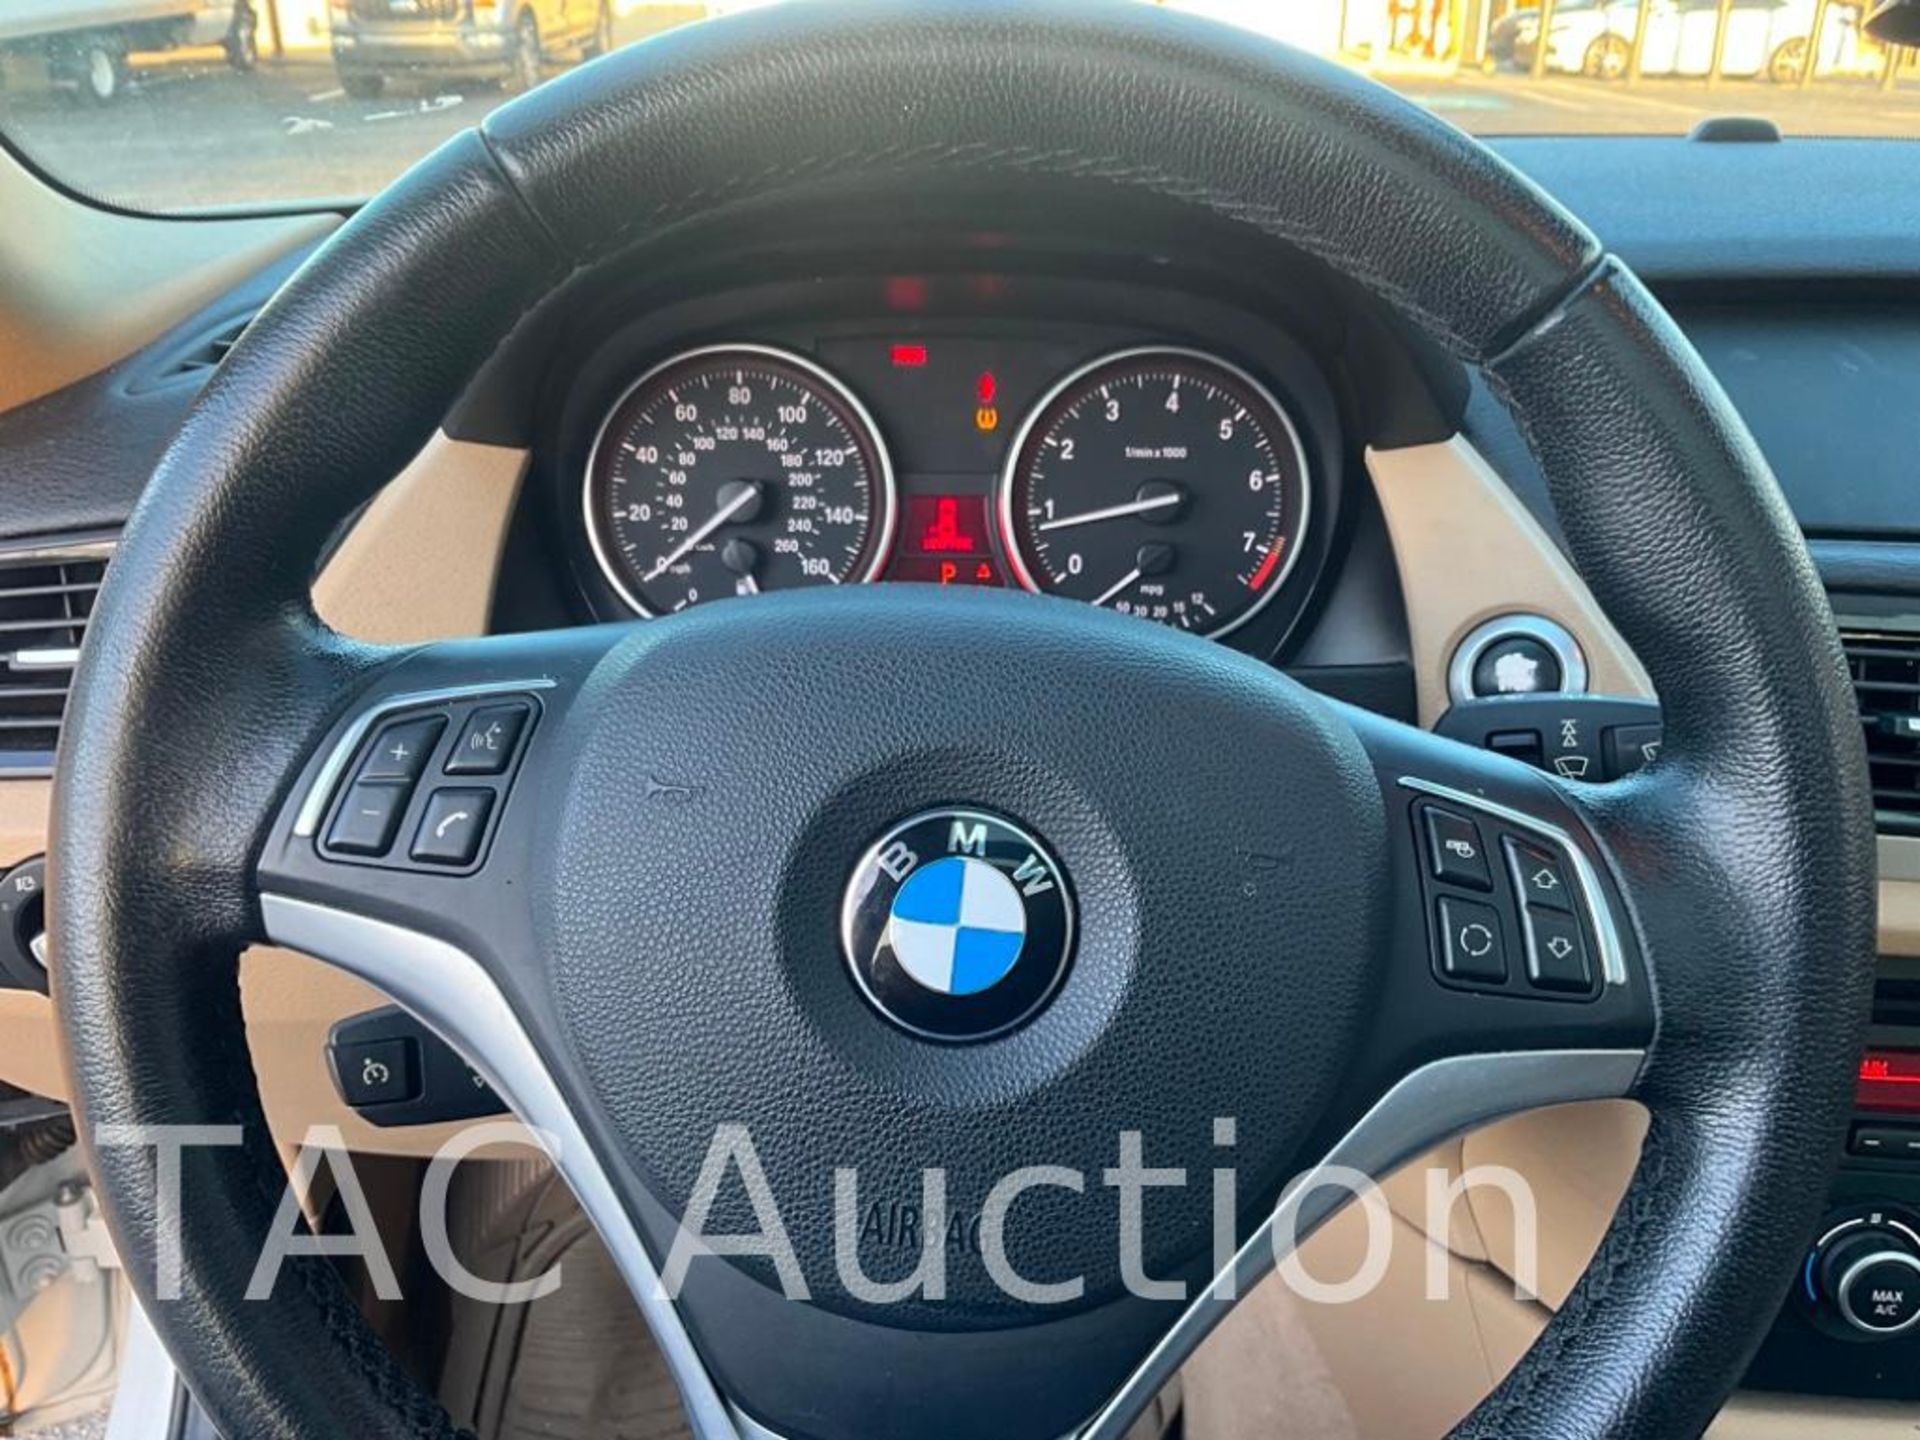 2014 BMW X1 SUV - Image 17 of 51